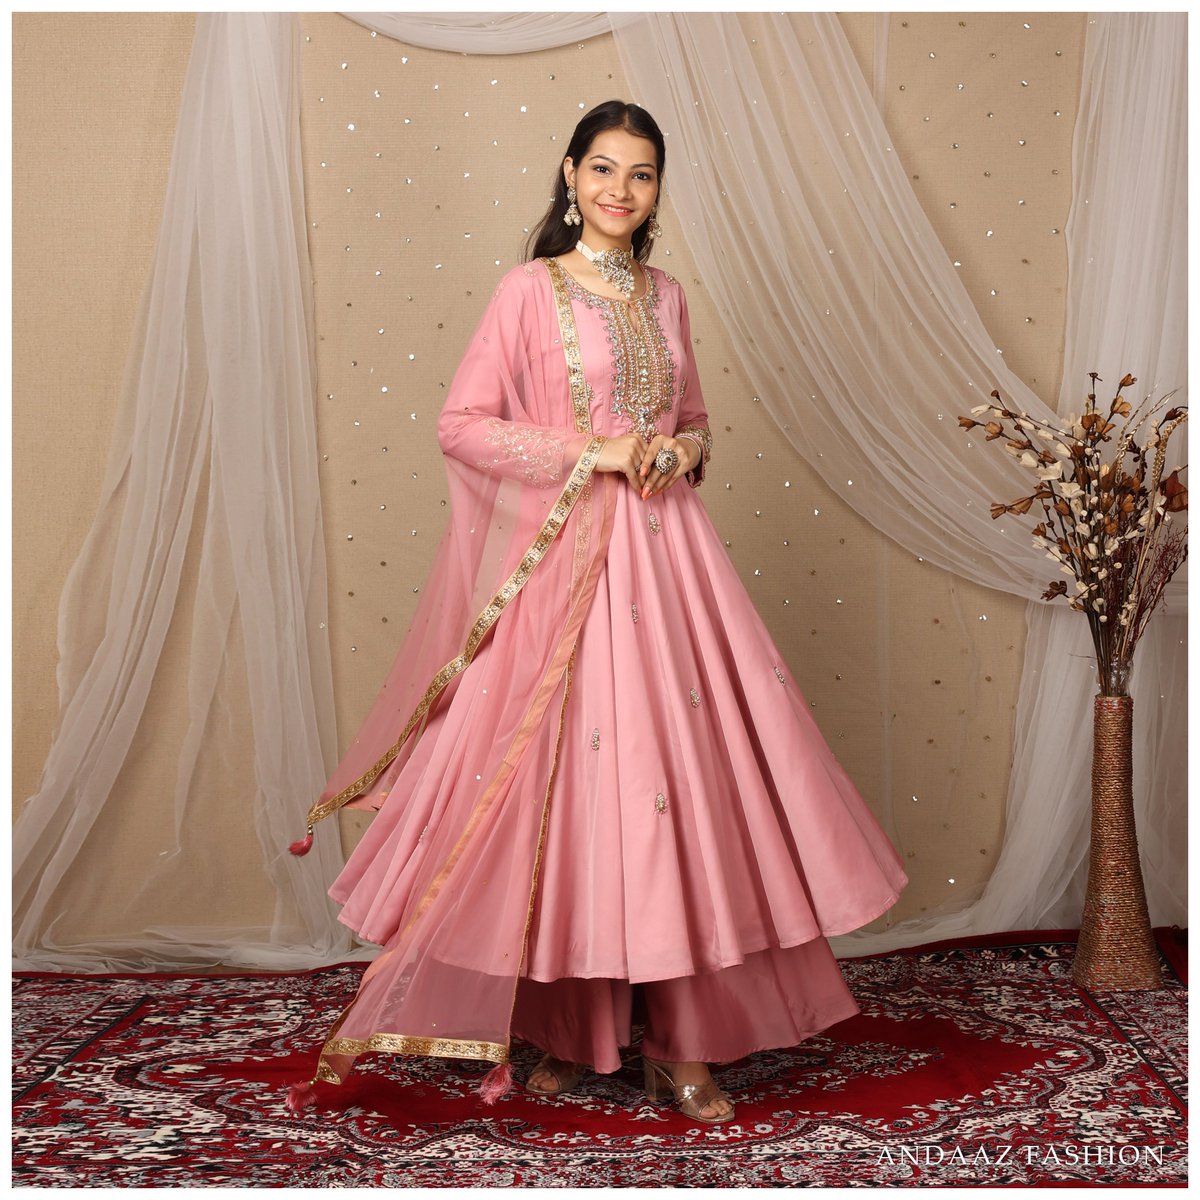 Pale Pink Anarkali is One of our favorite pick this Eid.
.
Product Code:-LSTV112437
.
andaazfashion.com/salwar-kameez/…
.
#indianfashion #indianwear #anarkali #anarkalisuits #ethnicwear #indiandresses #usa